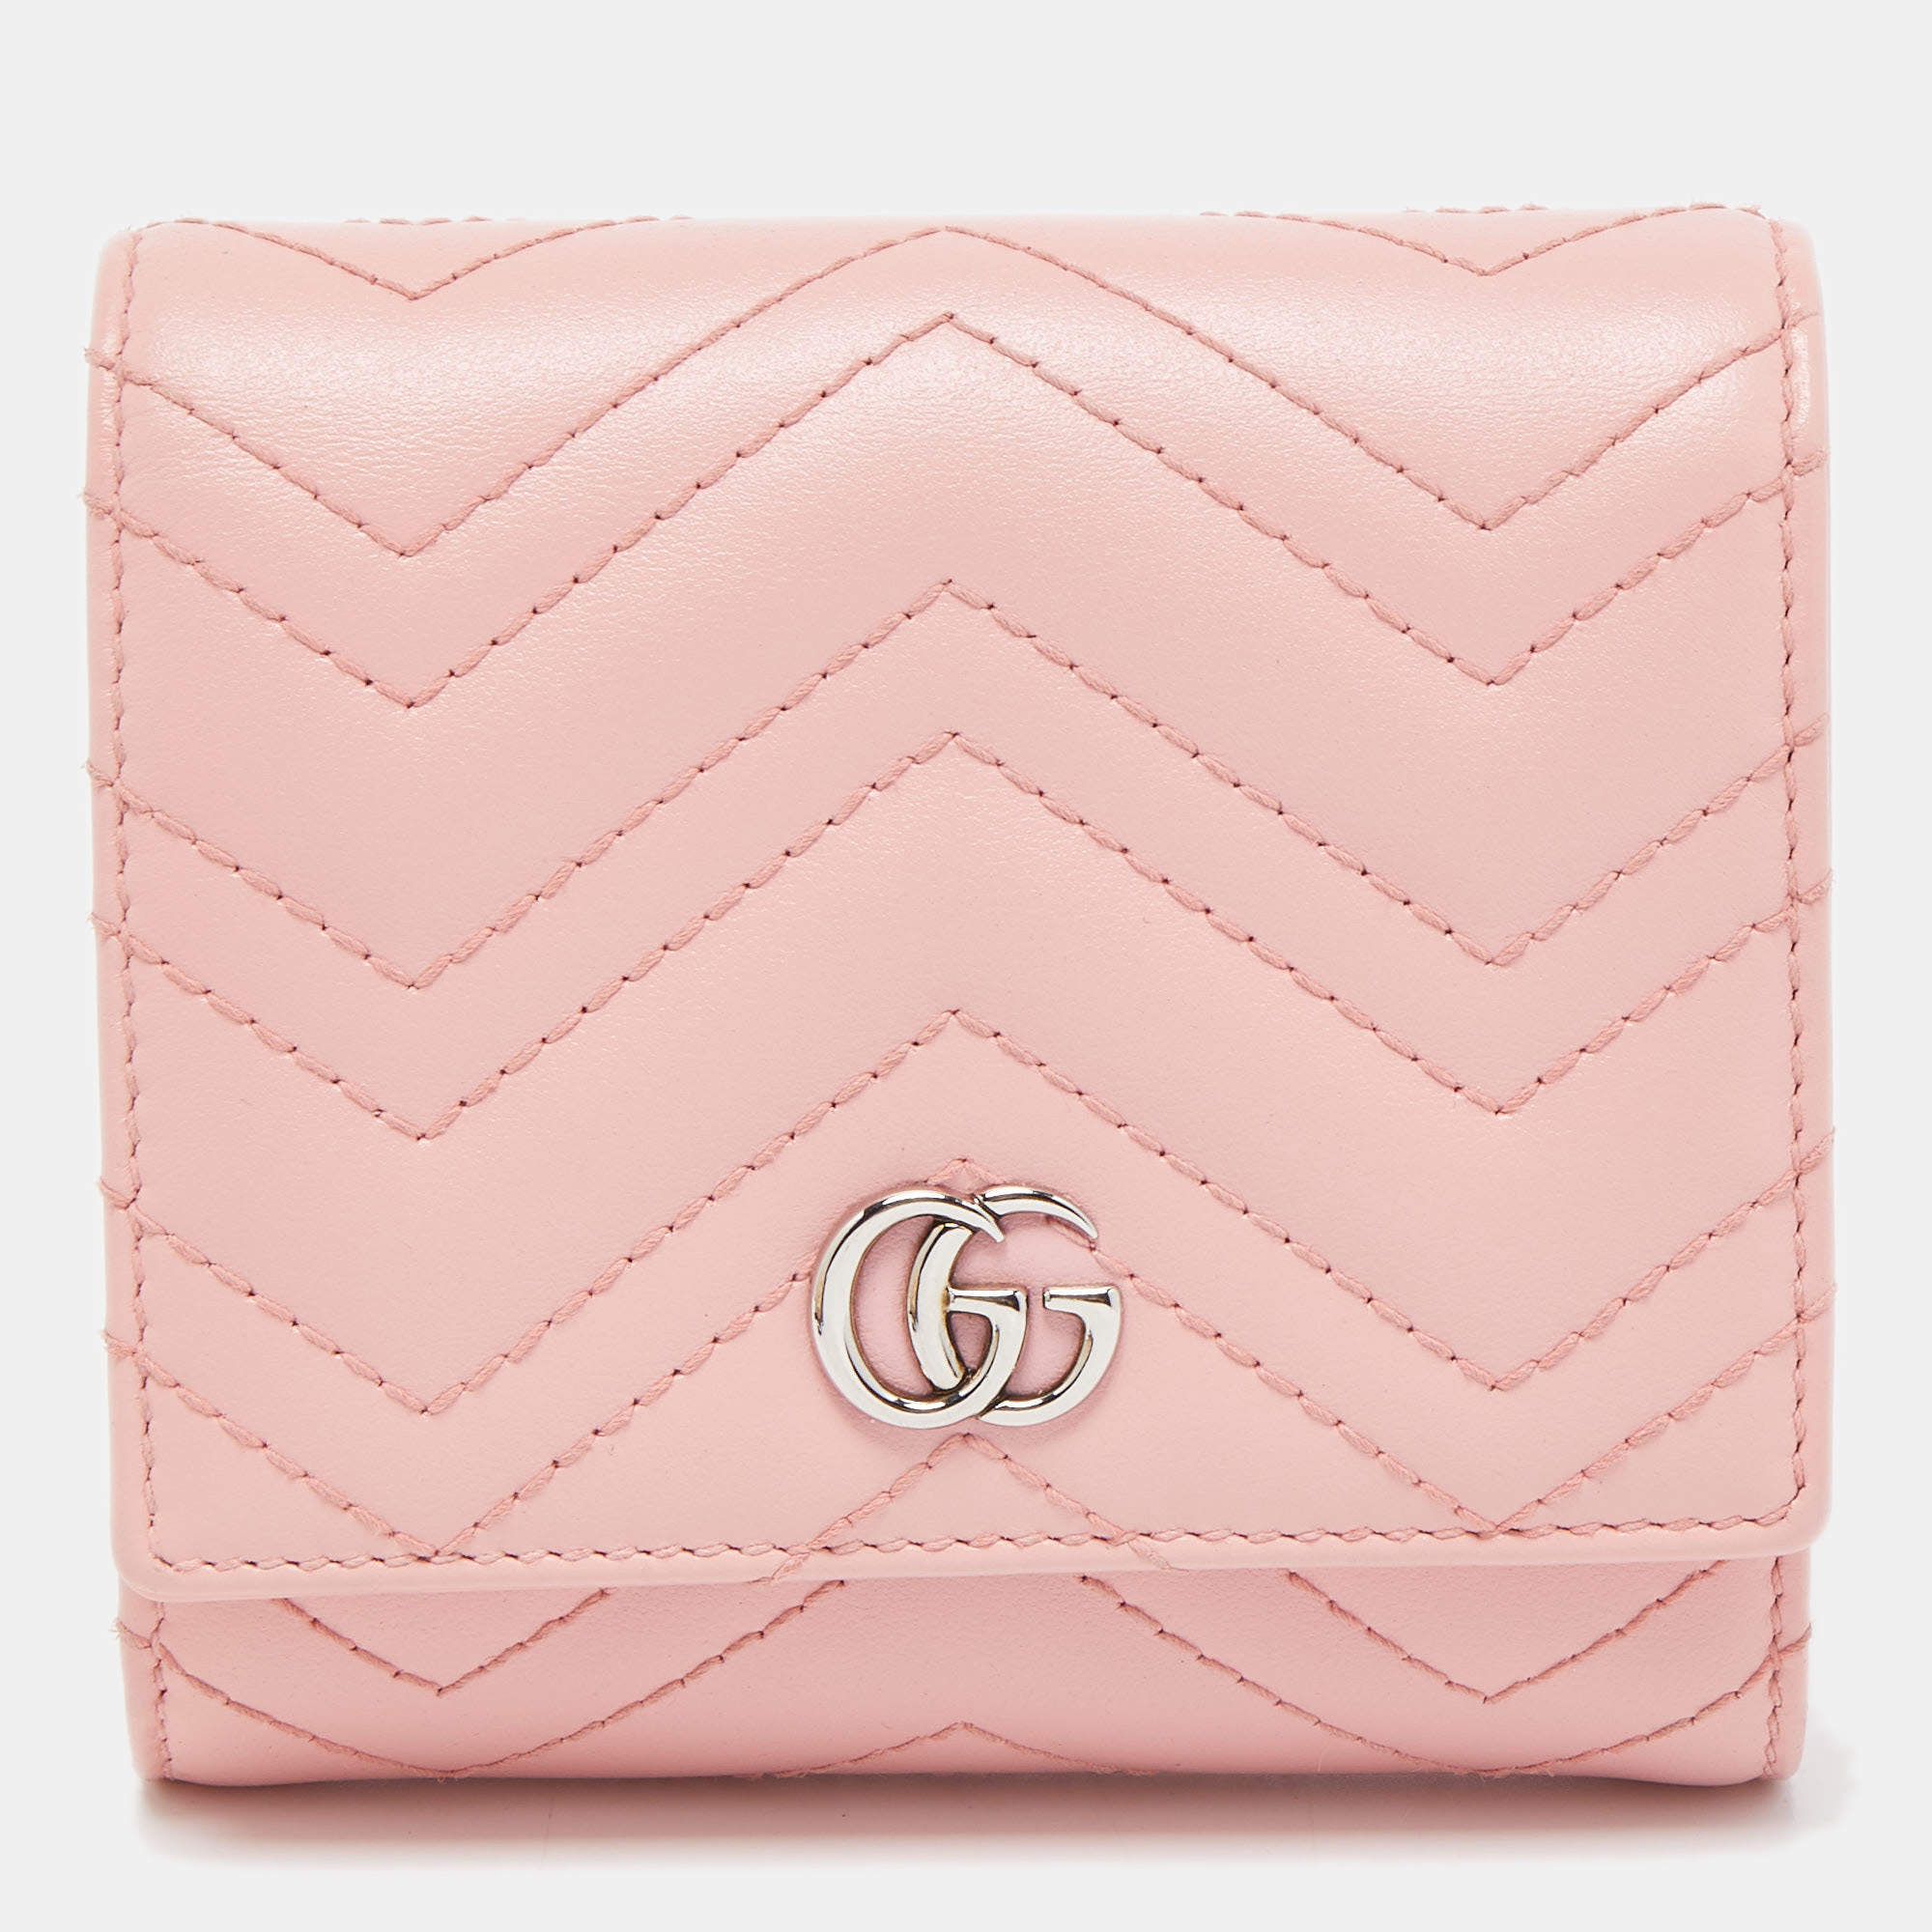 luxury-women-gucci-new-handbags-p791193-001.jpg